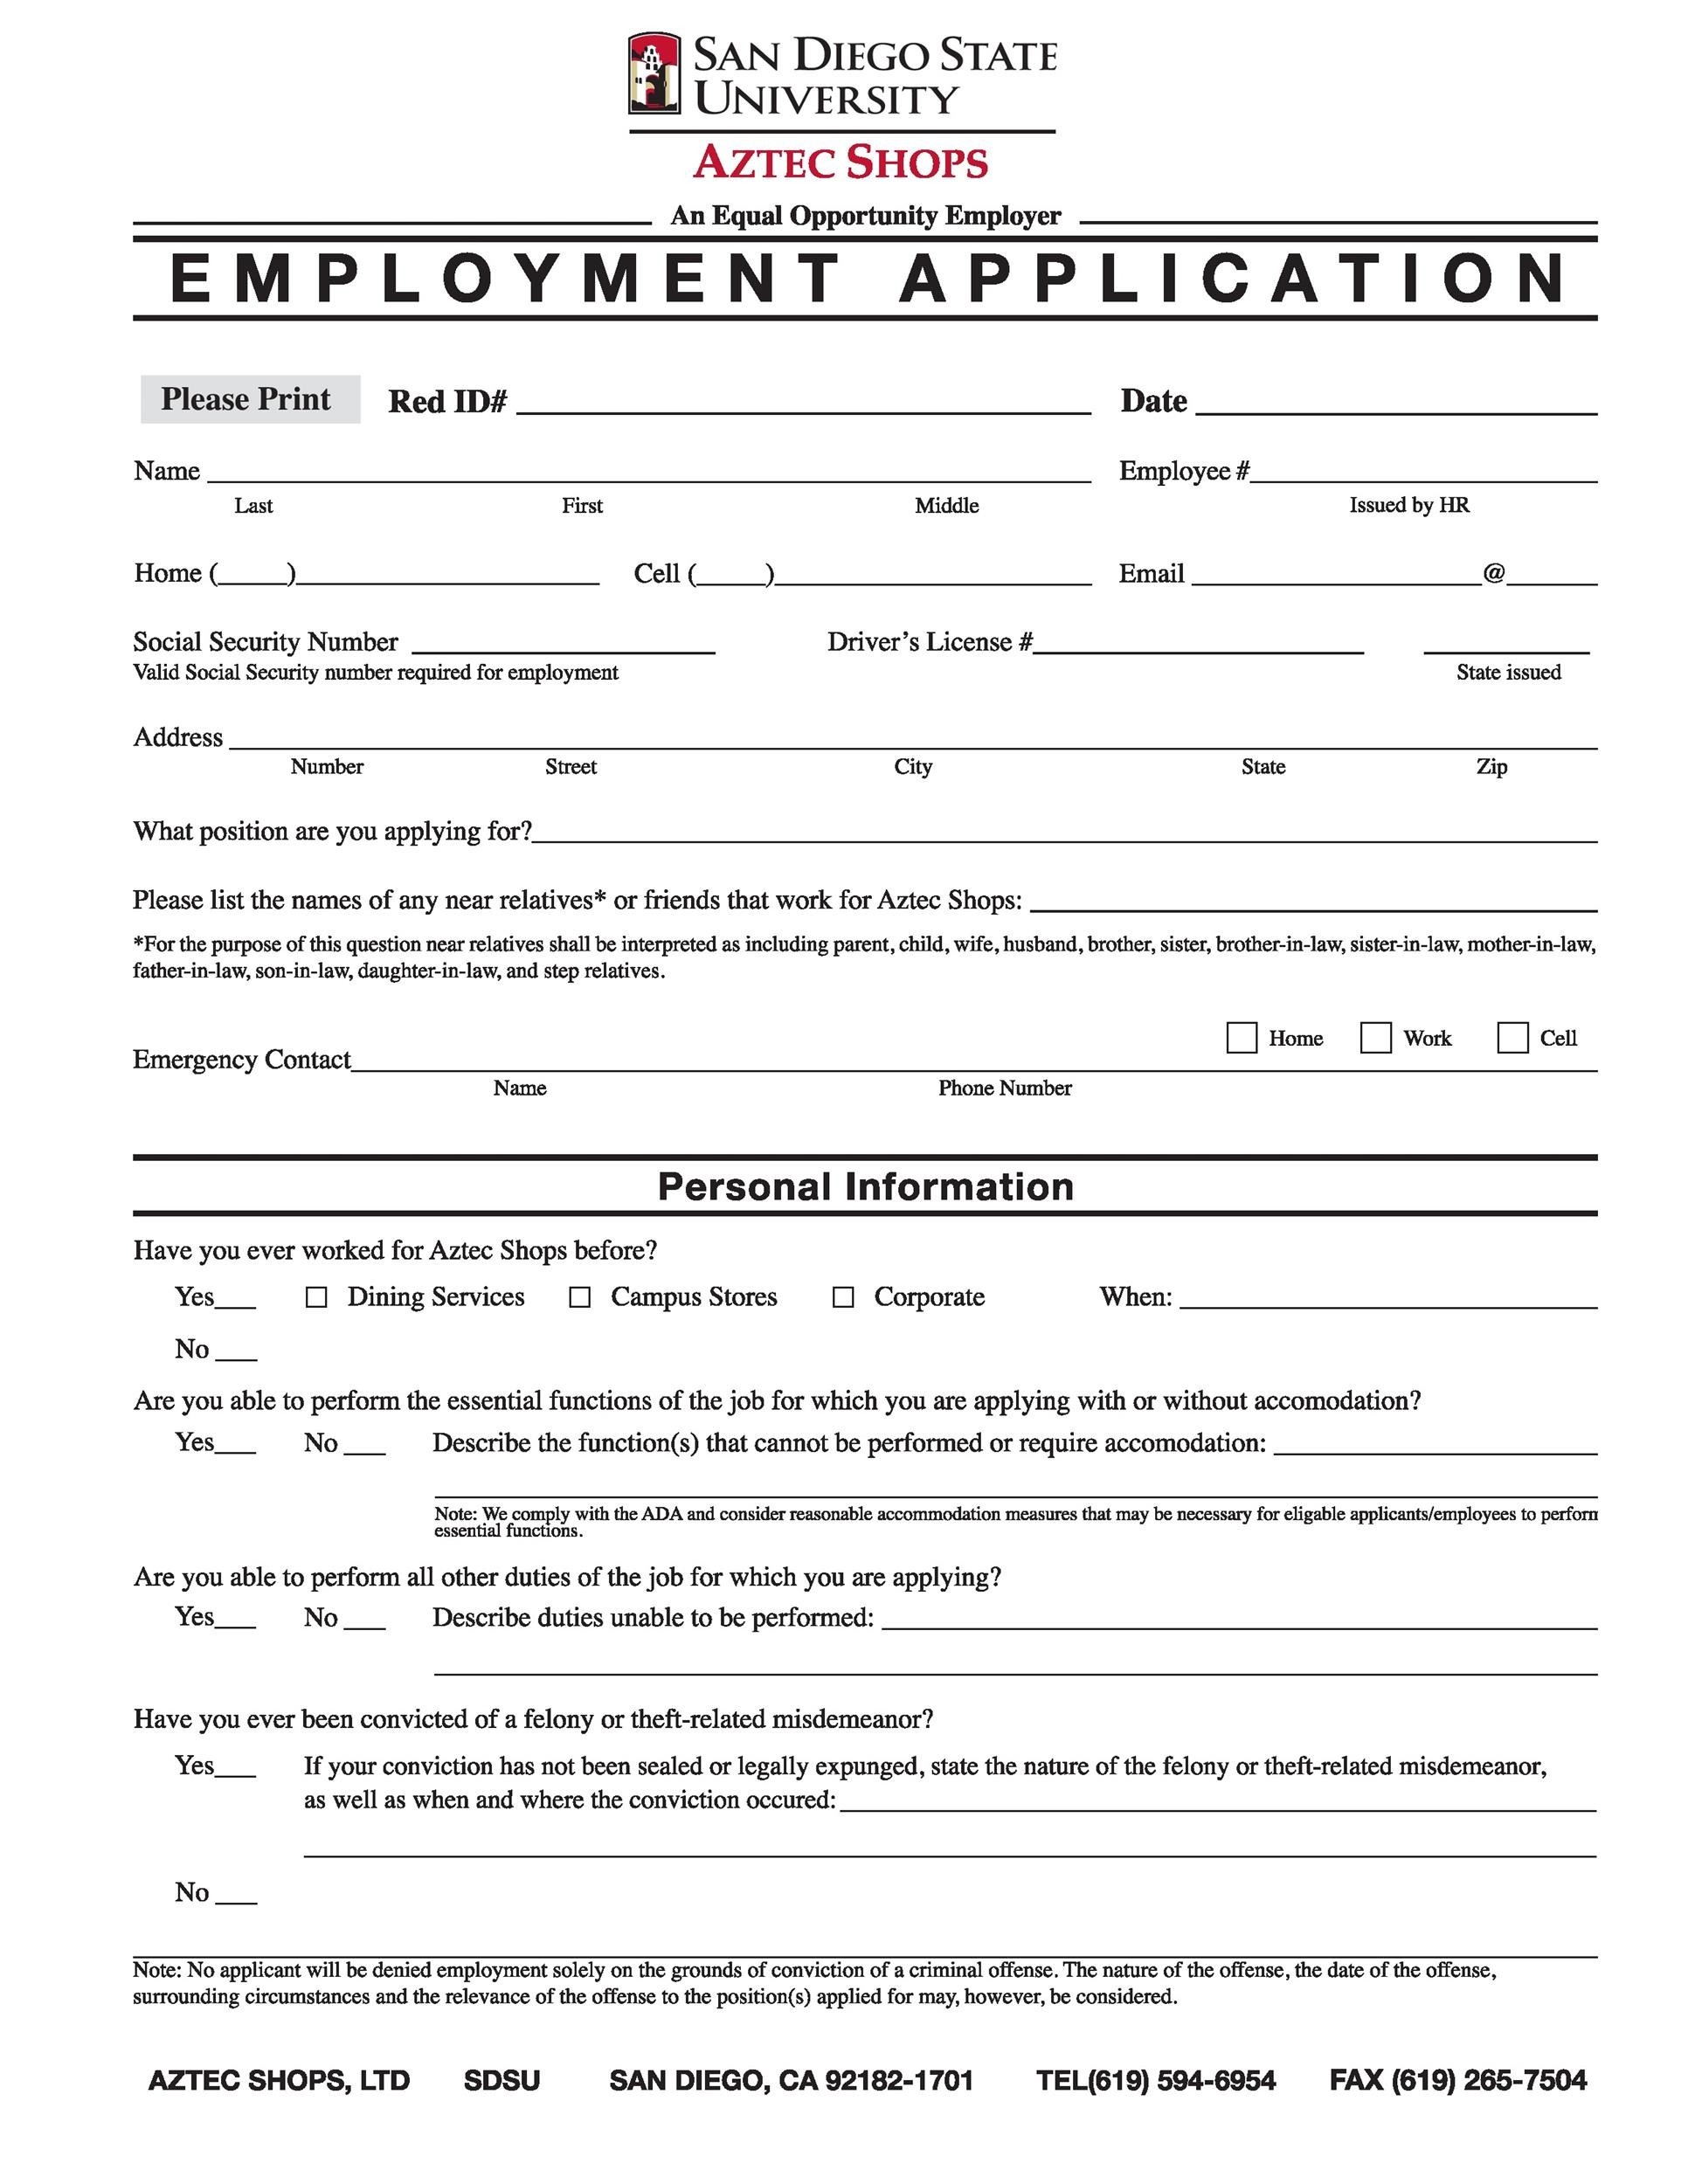 50 Free Employment / Job Application Form Templates [Printable] ᐅ TemplateLab